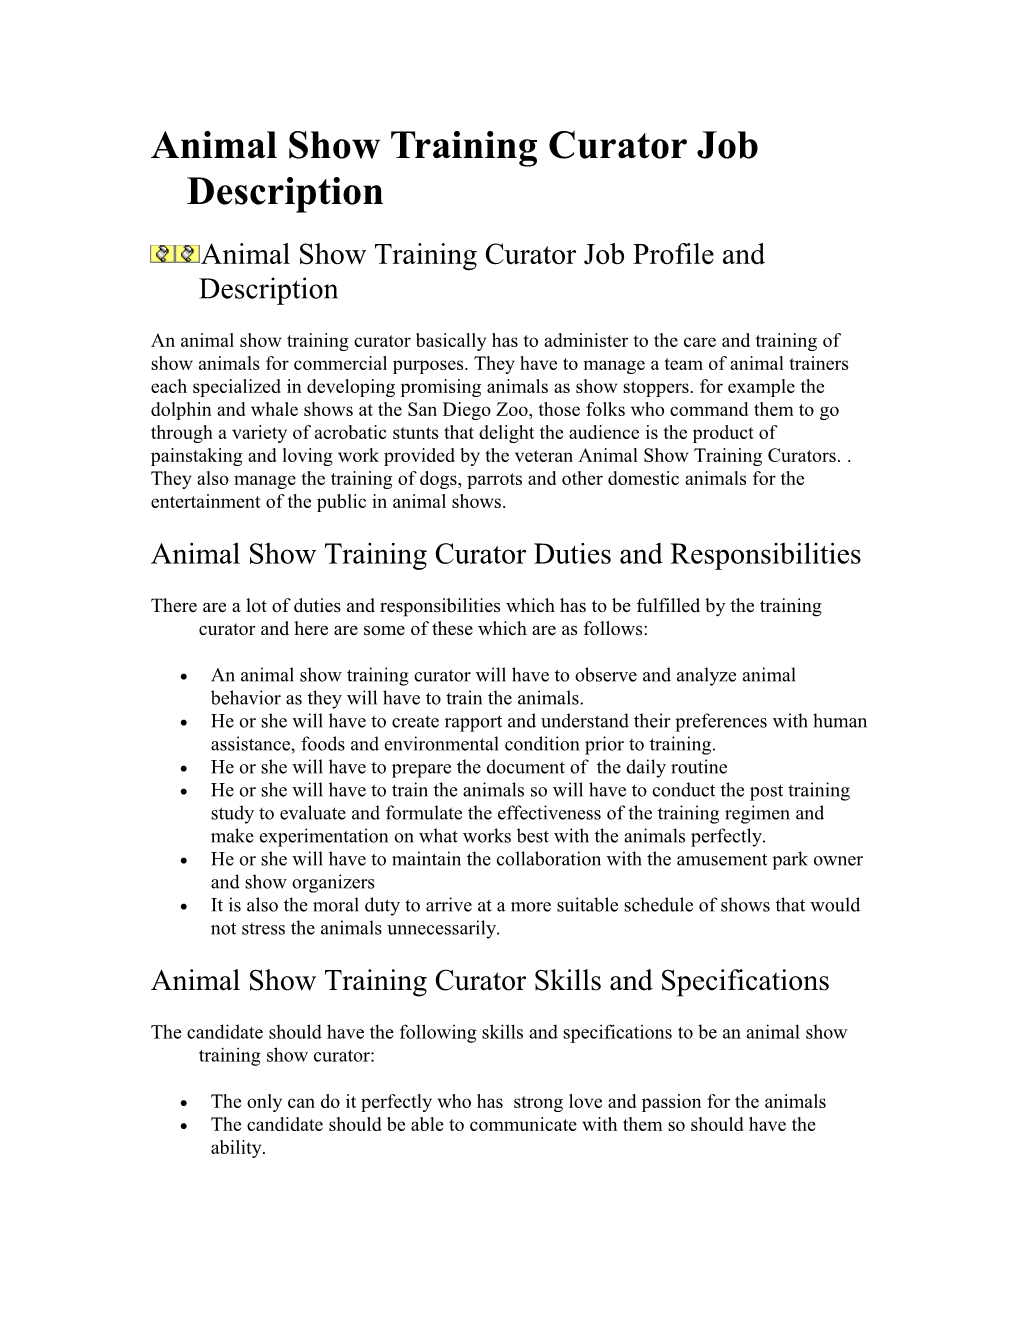 Animal Show Training Curator Job Description